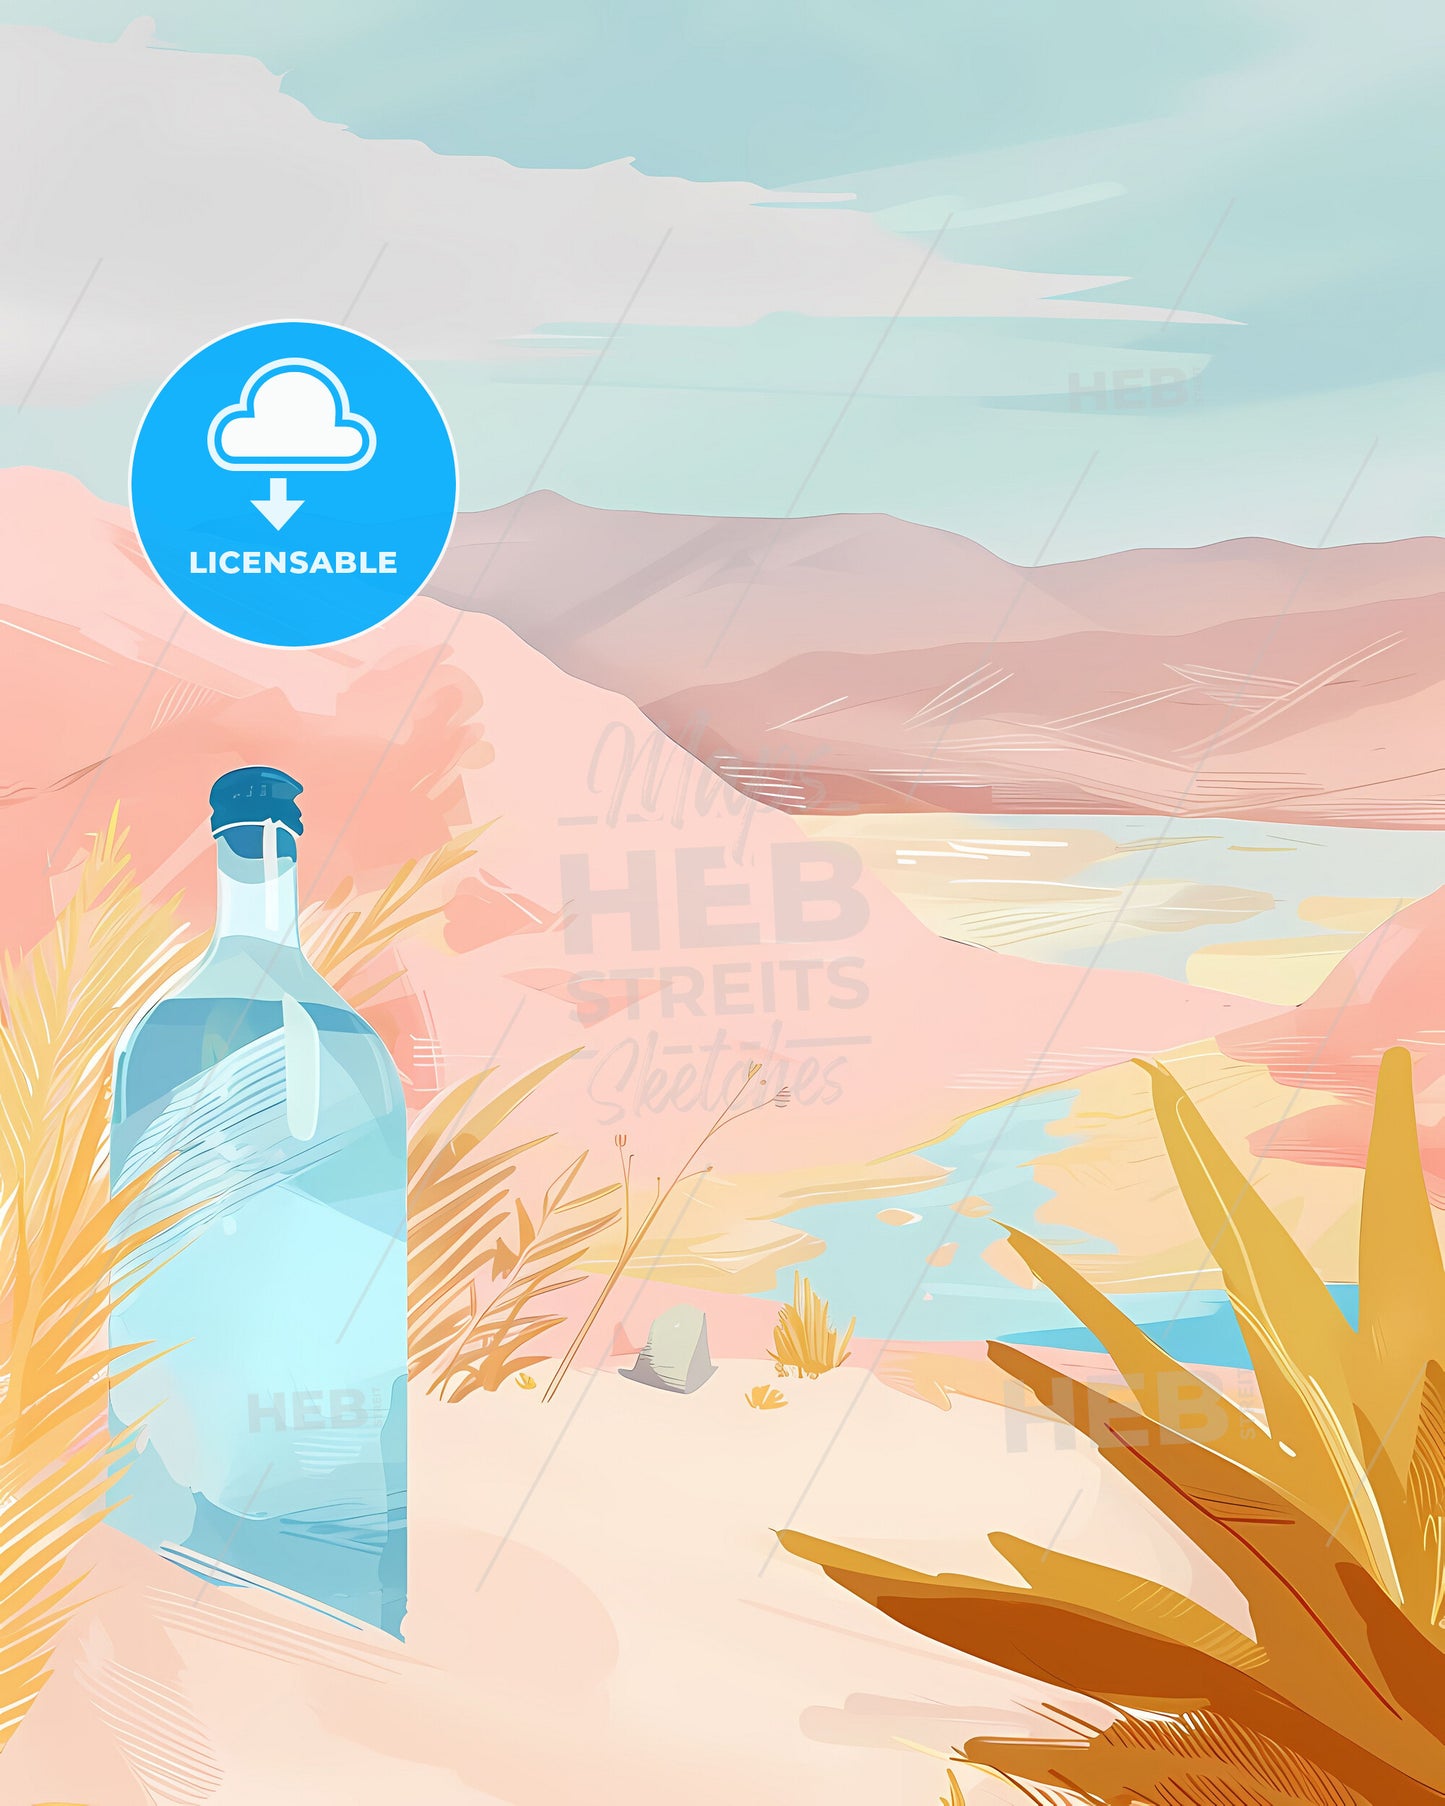 Abstract Blue Painting with Japanese Sake, Delicate Landscape, Animation Still, Bottle in Desert, Vibrant Art